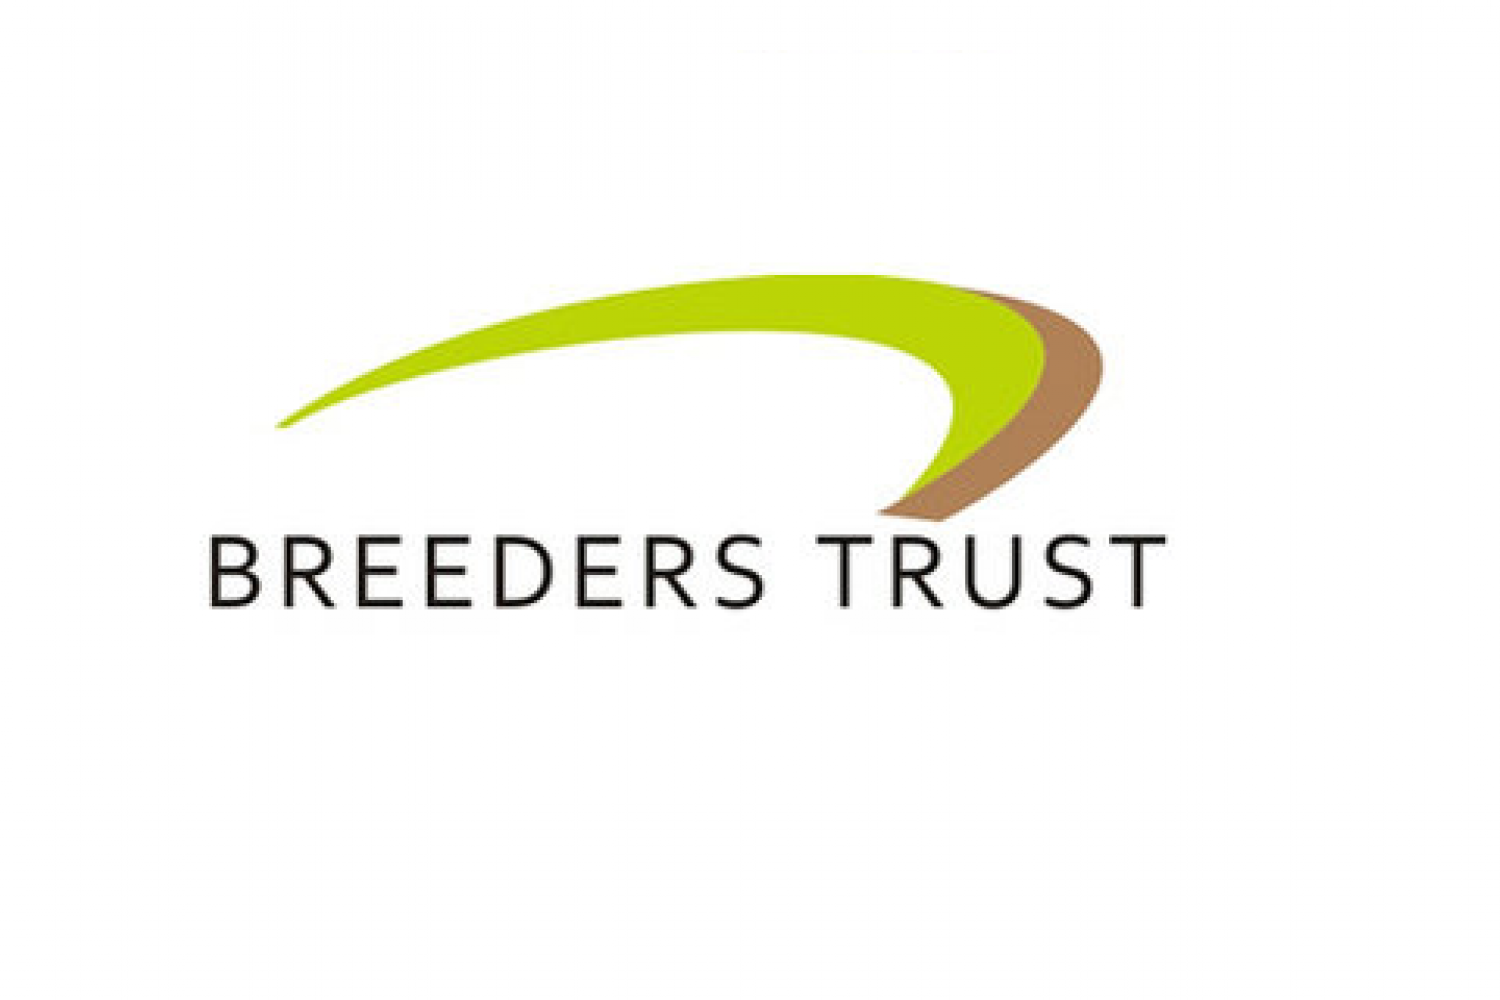 Breeders trust